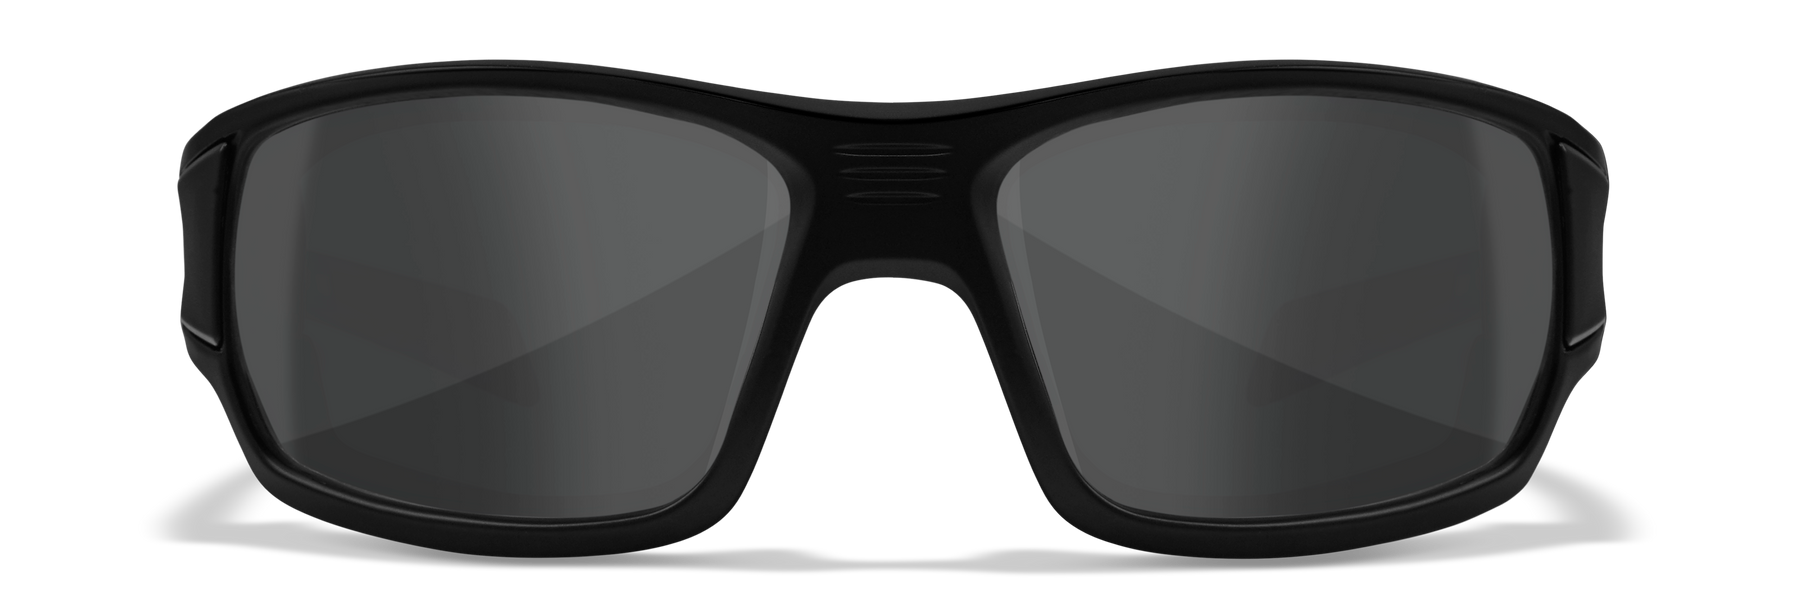 Wiley-X Breach - Ballistic Eyewear Tactical Sunglasses